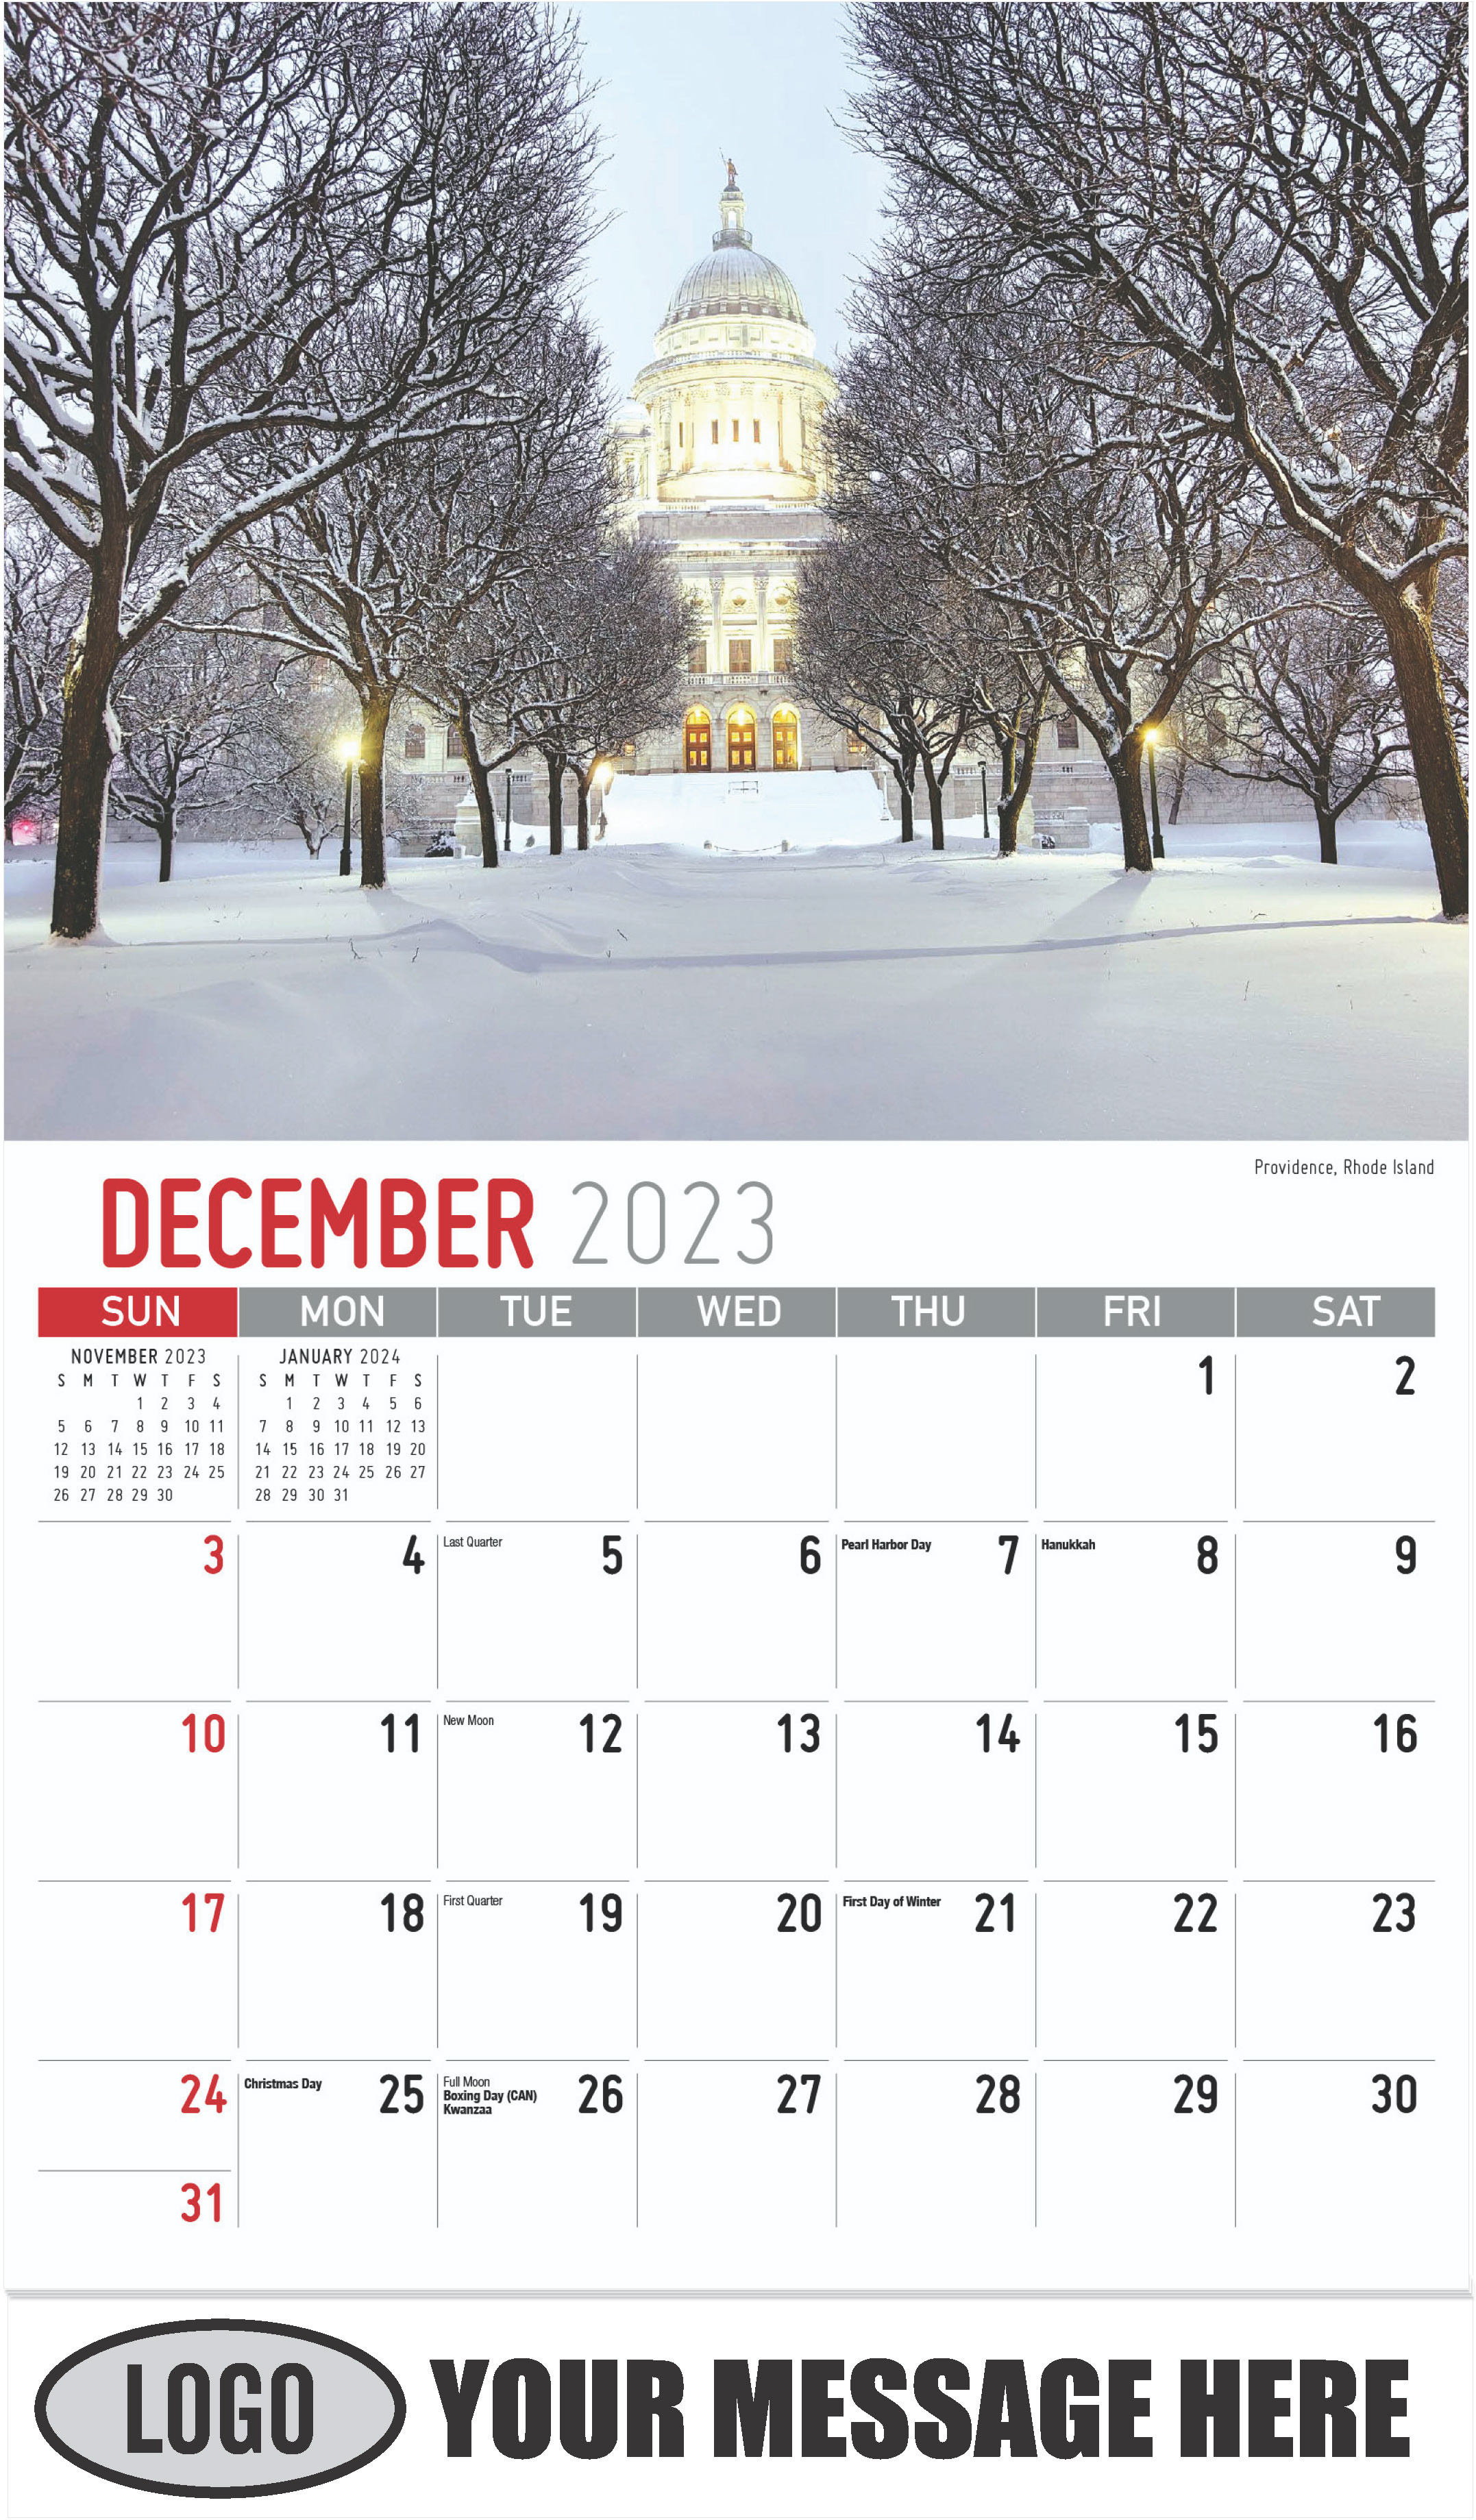 Providence, Rhode Island - December 2023 - Scenes of New England 2023 Promotional Calendar